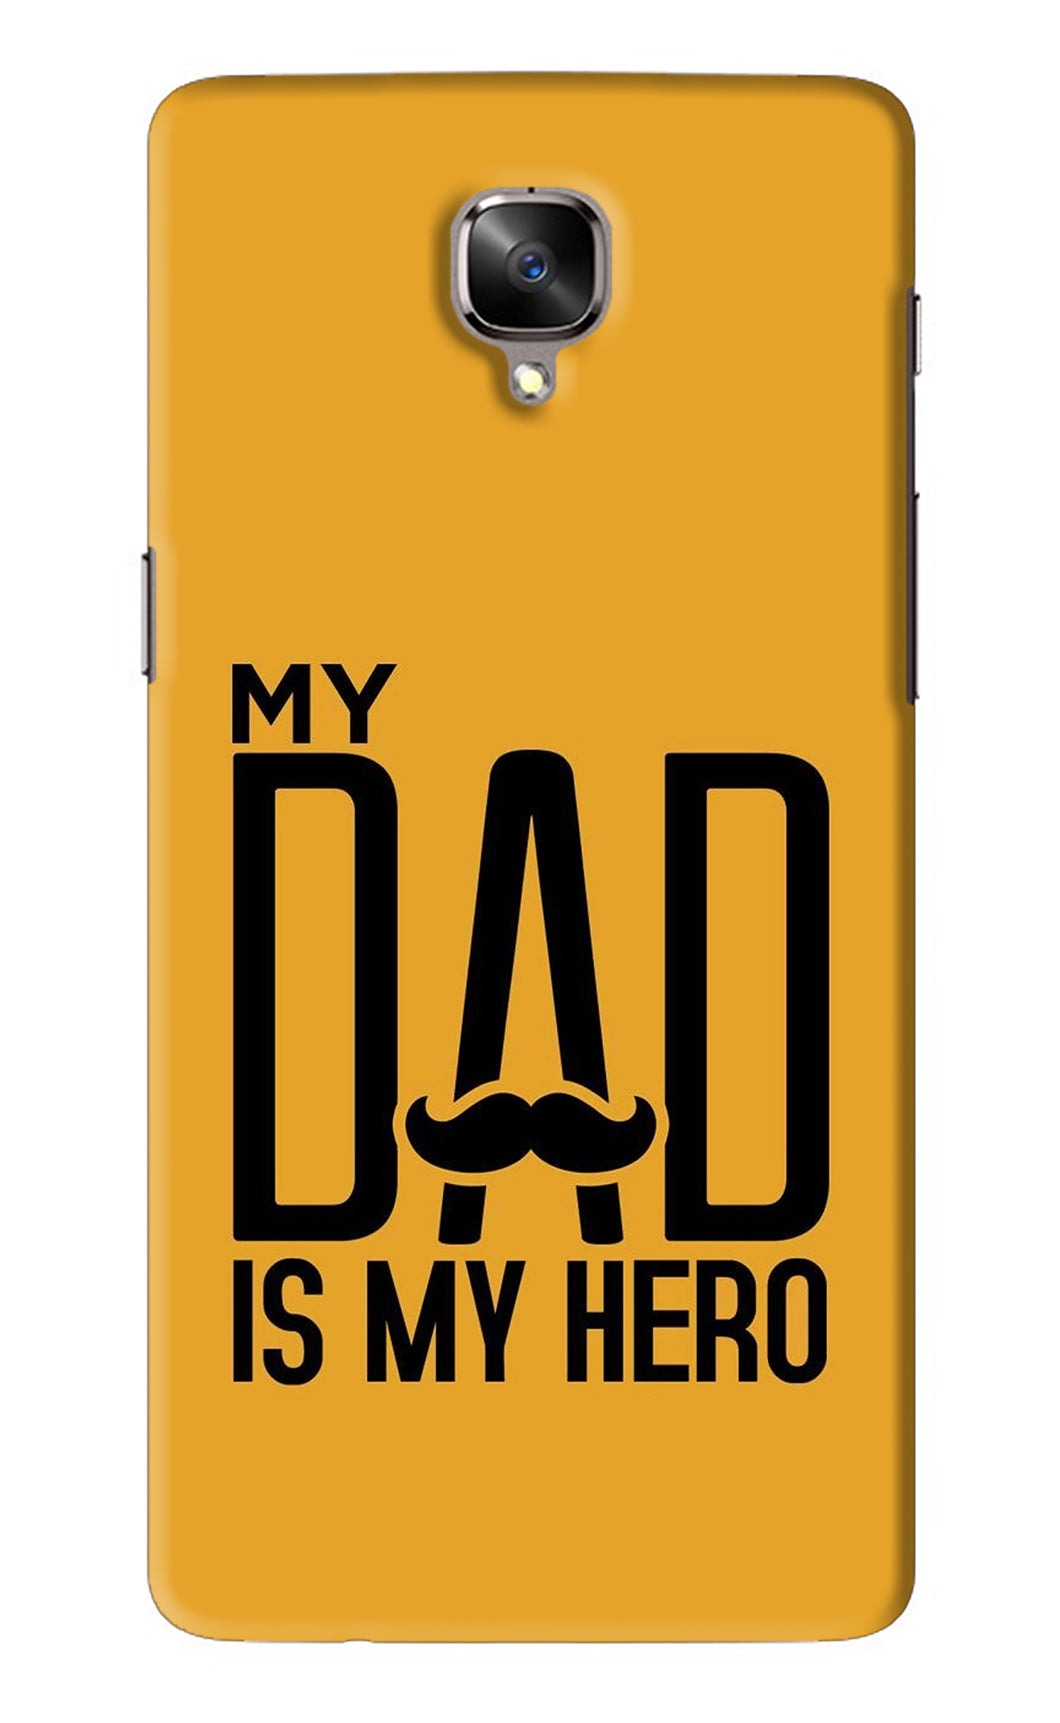 My Dad Is My Hero OnePlus 3T Back Skin Wrap